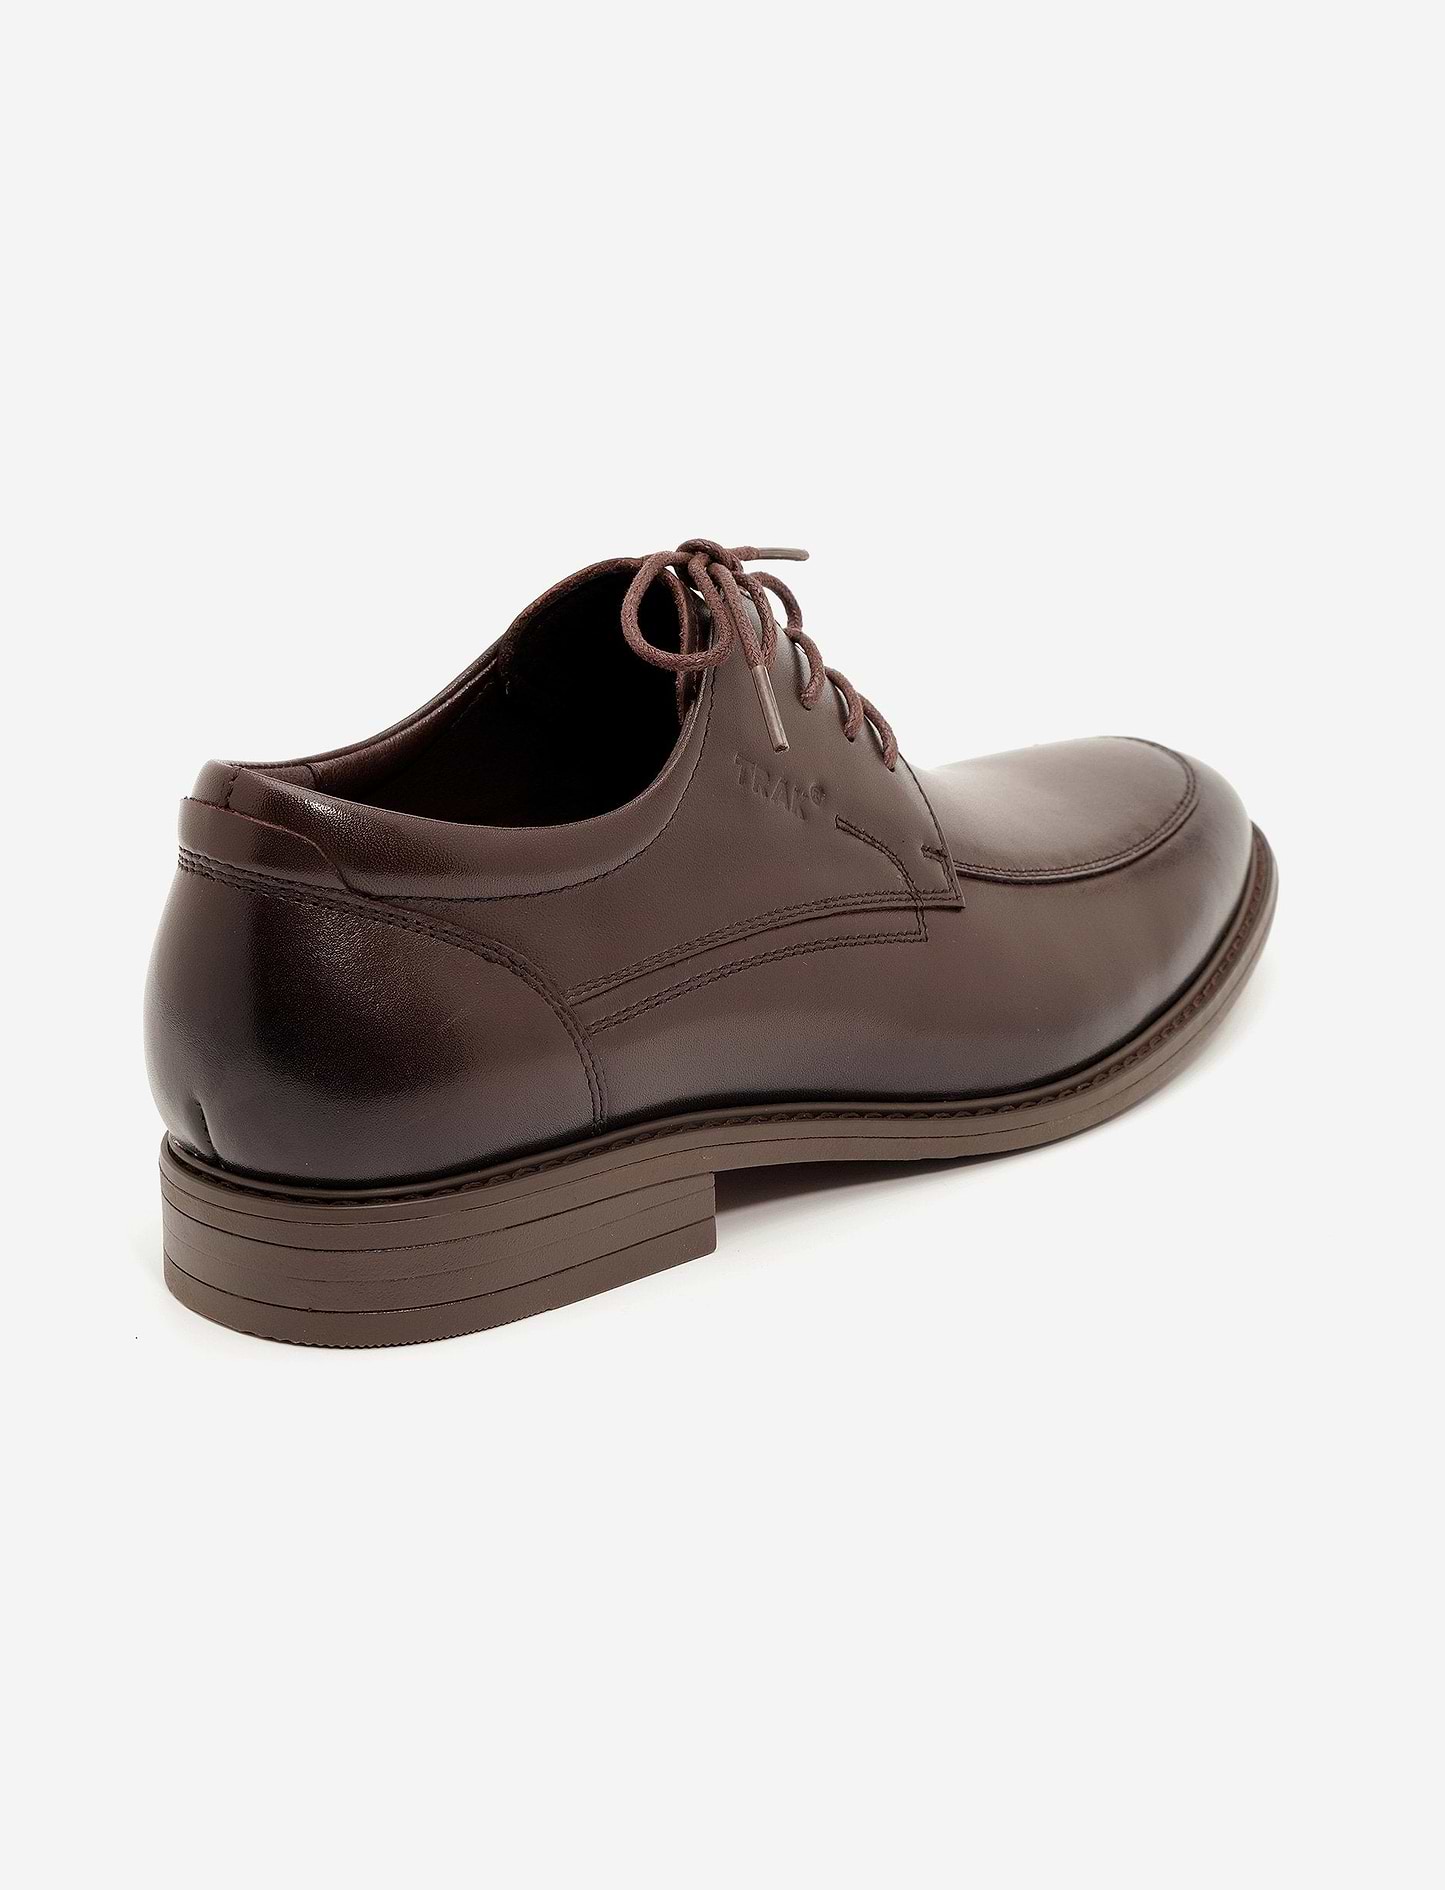 Trak- נעלי עור אלגנטיות טראק דגם גולן לגברים בצבע חום